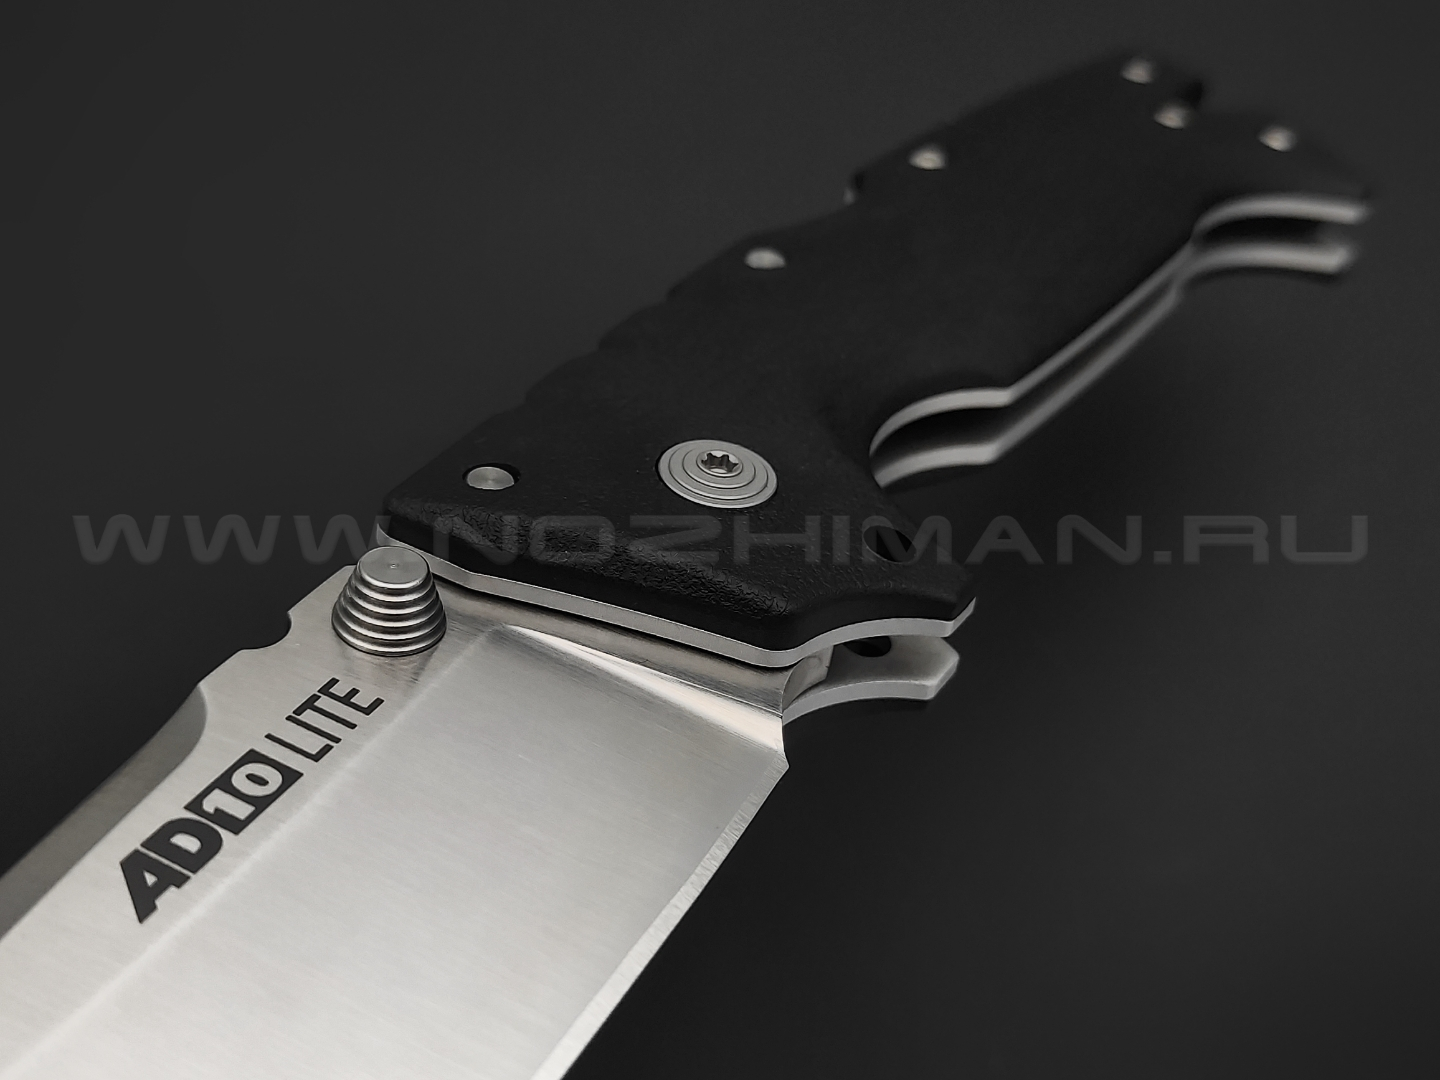 Нож Cold Steel AD-10 Lite FL-AD10 сталь Aus 10A, рукоять Glass-filled nylon